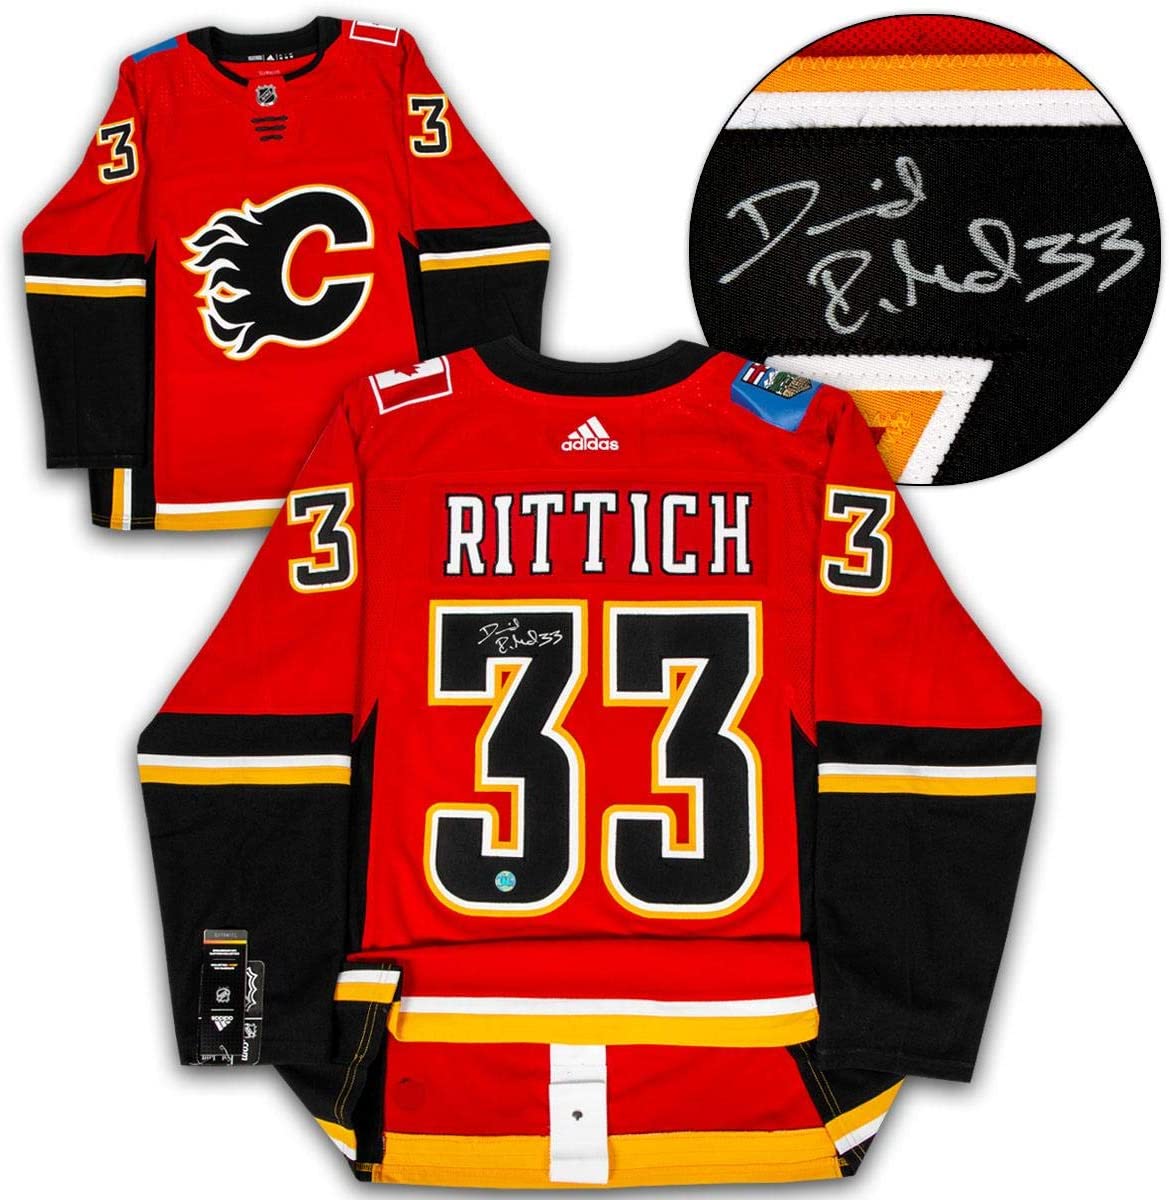 David Rittich Calgary Flames Autographed Adidas Jersey